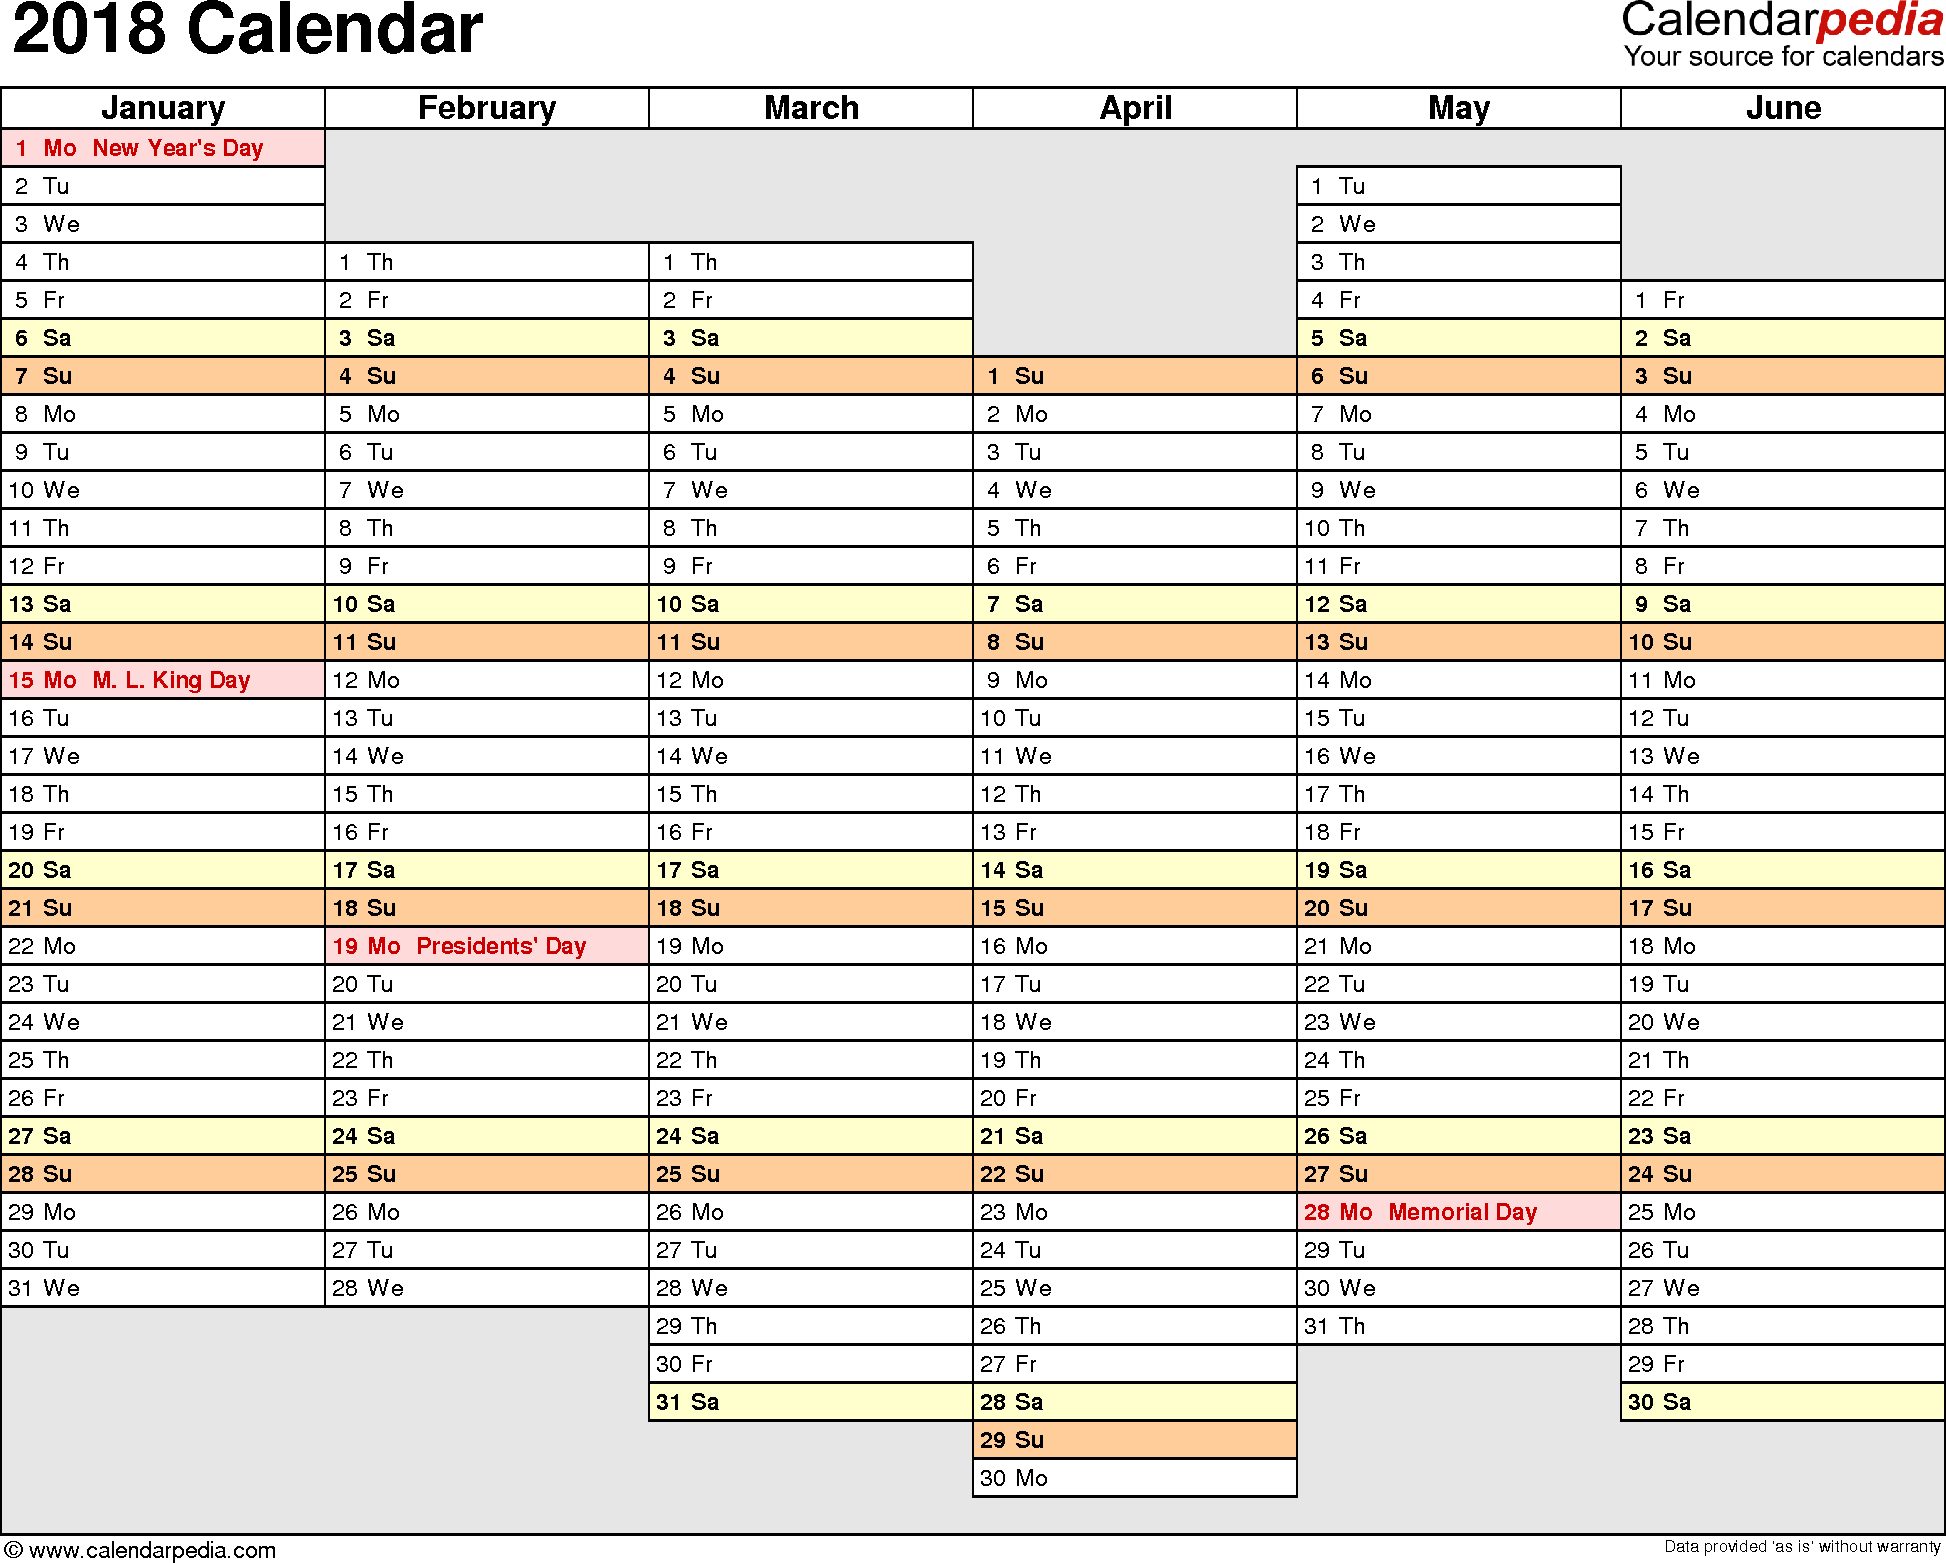 Calendar Spreadsheet Template 2018 With Regard To 2018 Calendar  Download 17 Free Printable Excel Templates .xlsx